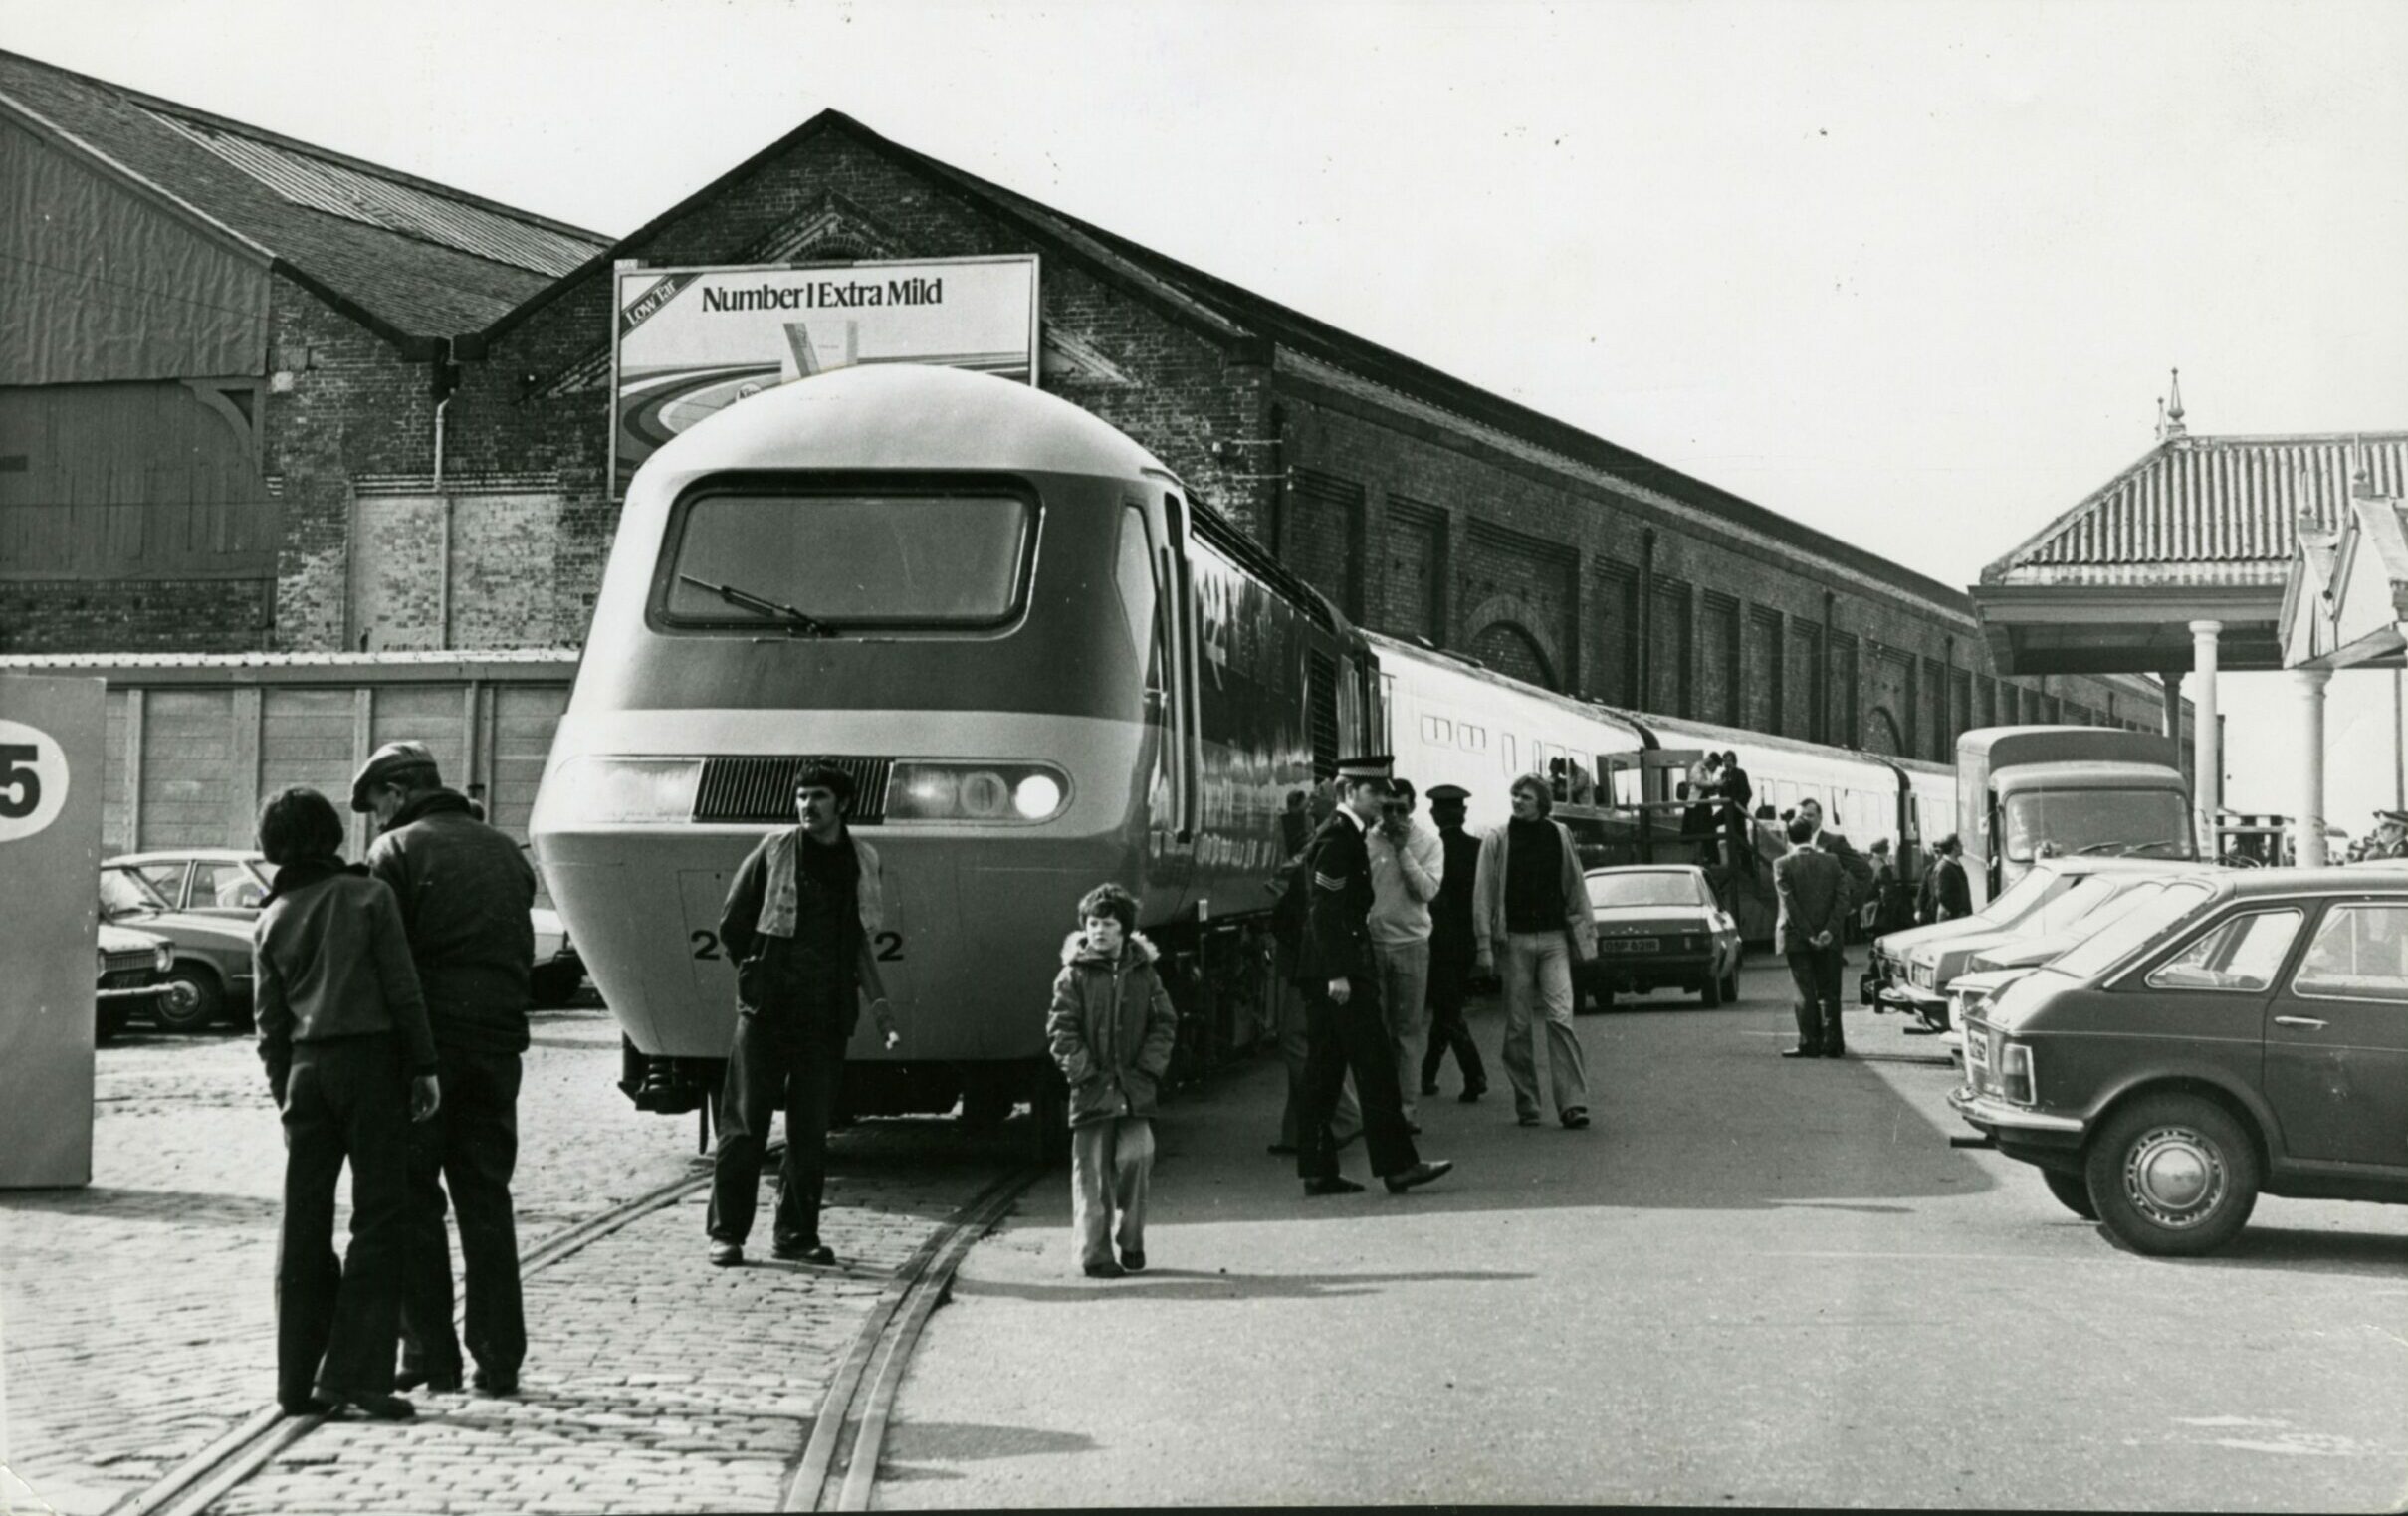 British Rail's high speed train on display at Tay Bridge Station in April 1978.